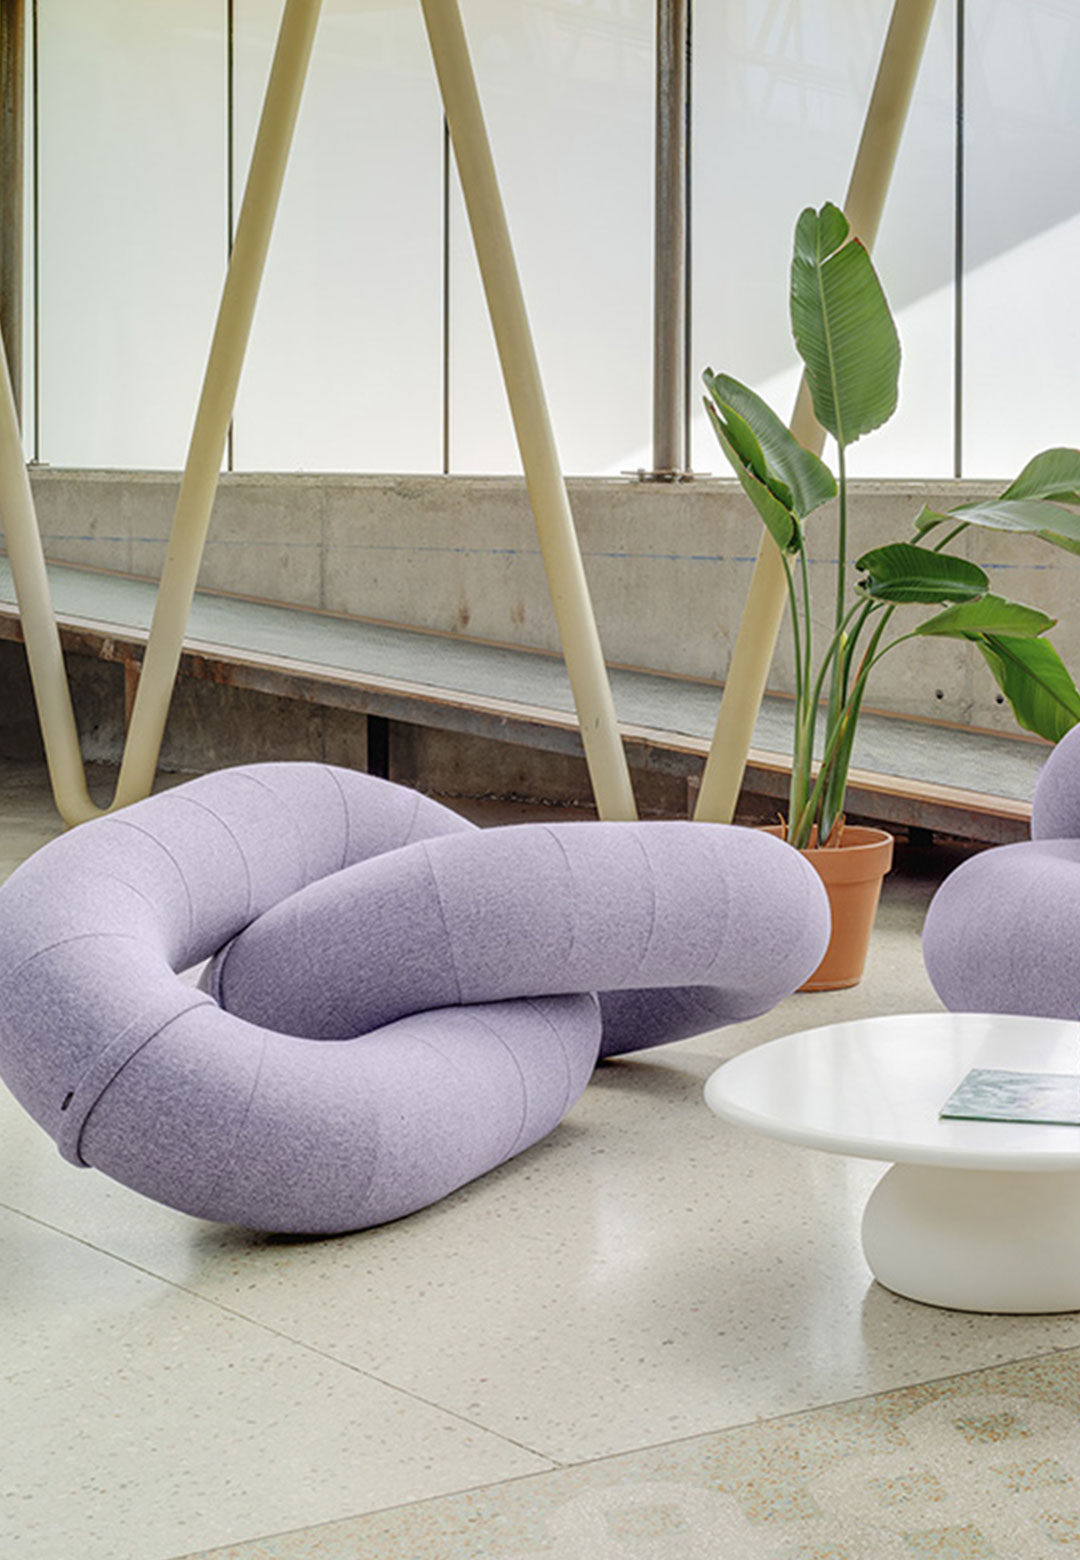 Sancal x Studio Raw Color’s Link & Loop sofa collection makes furniture fun!